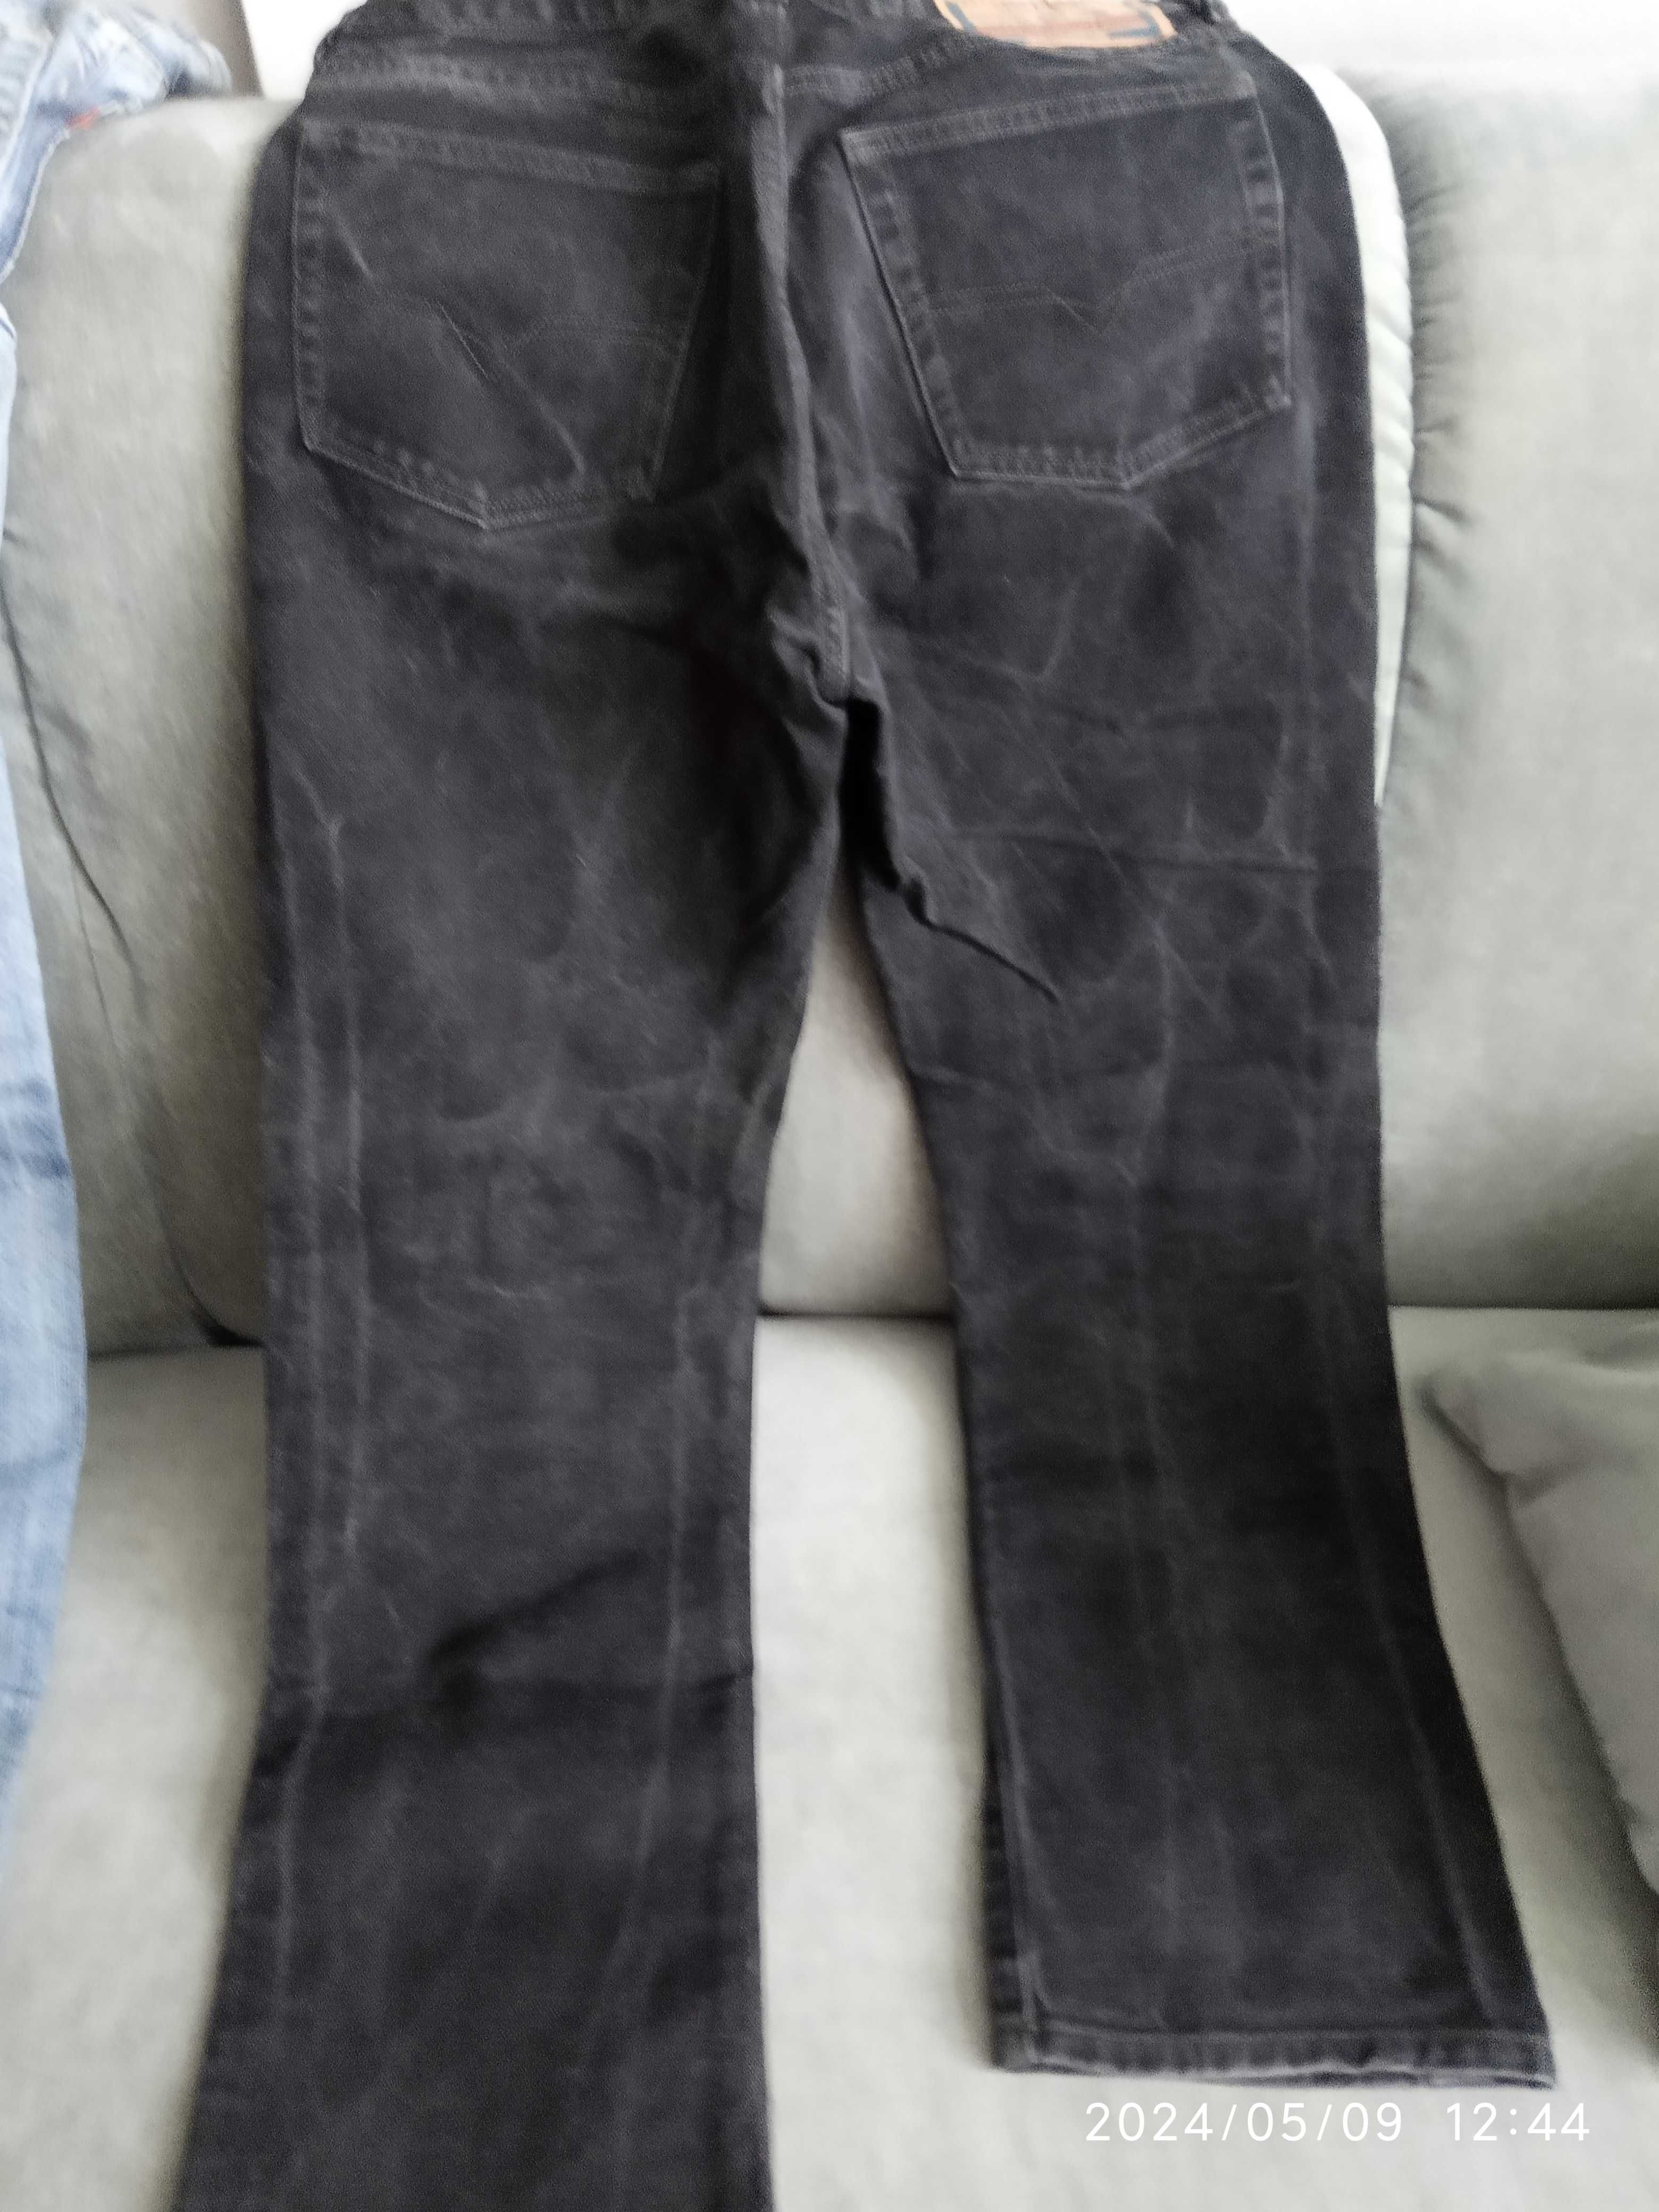 spodnie, jeansy męskie - rozm 31 / M